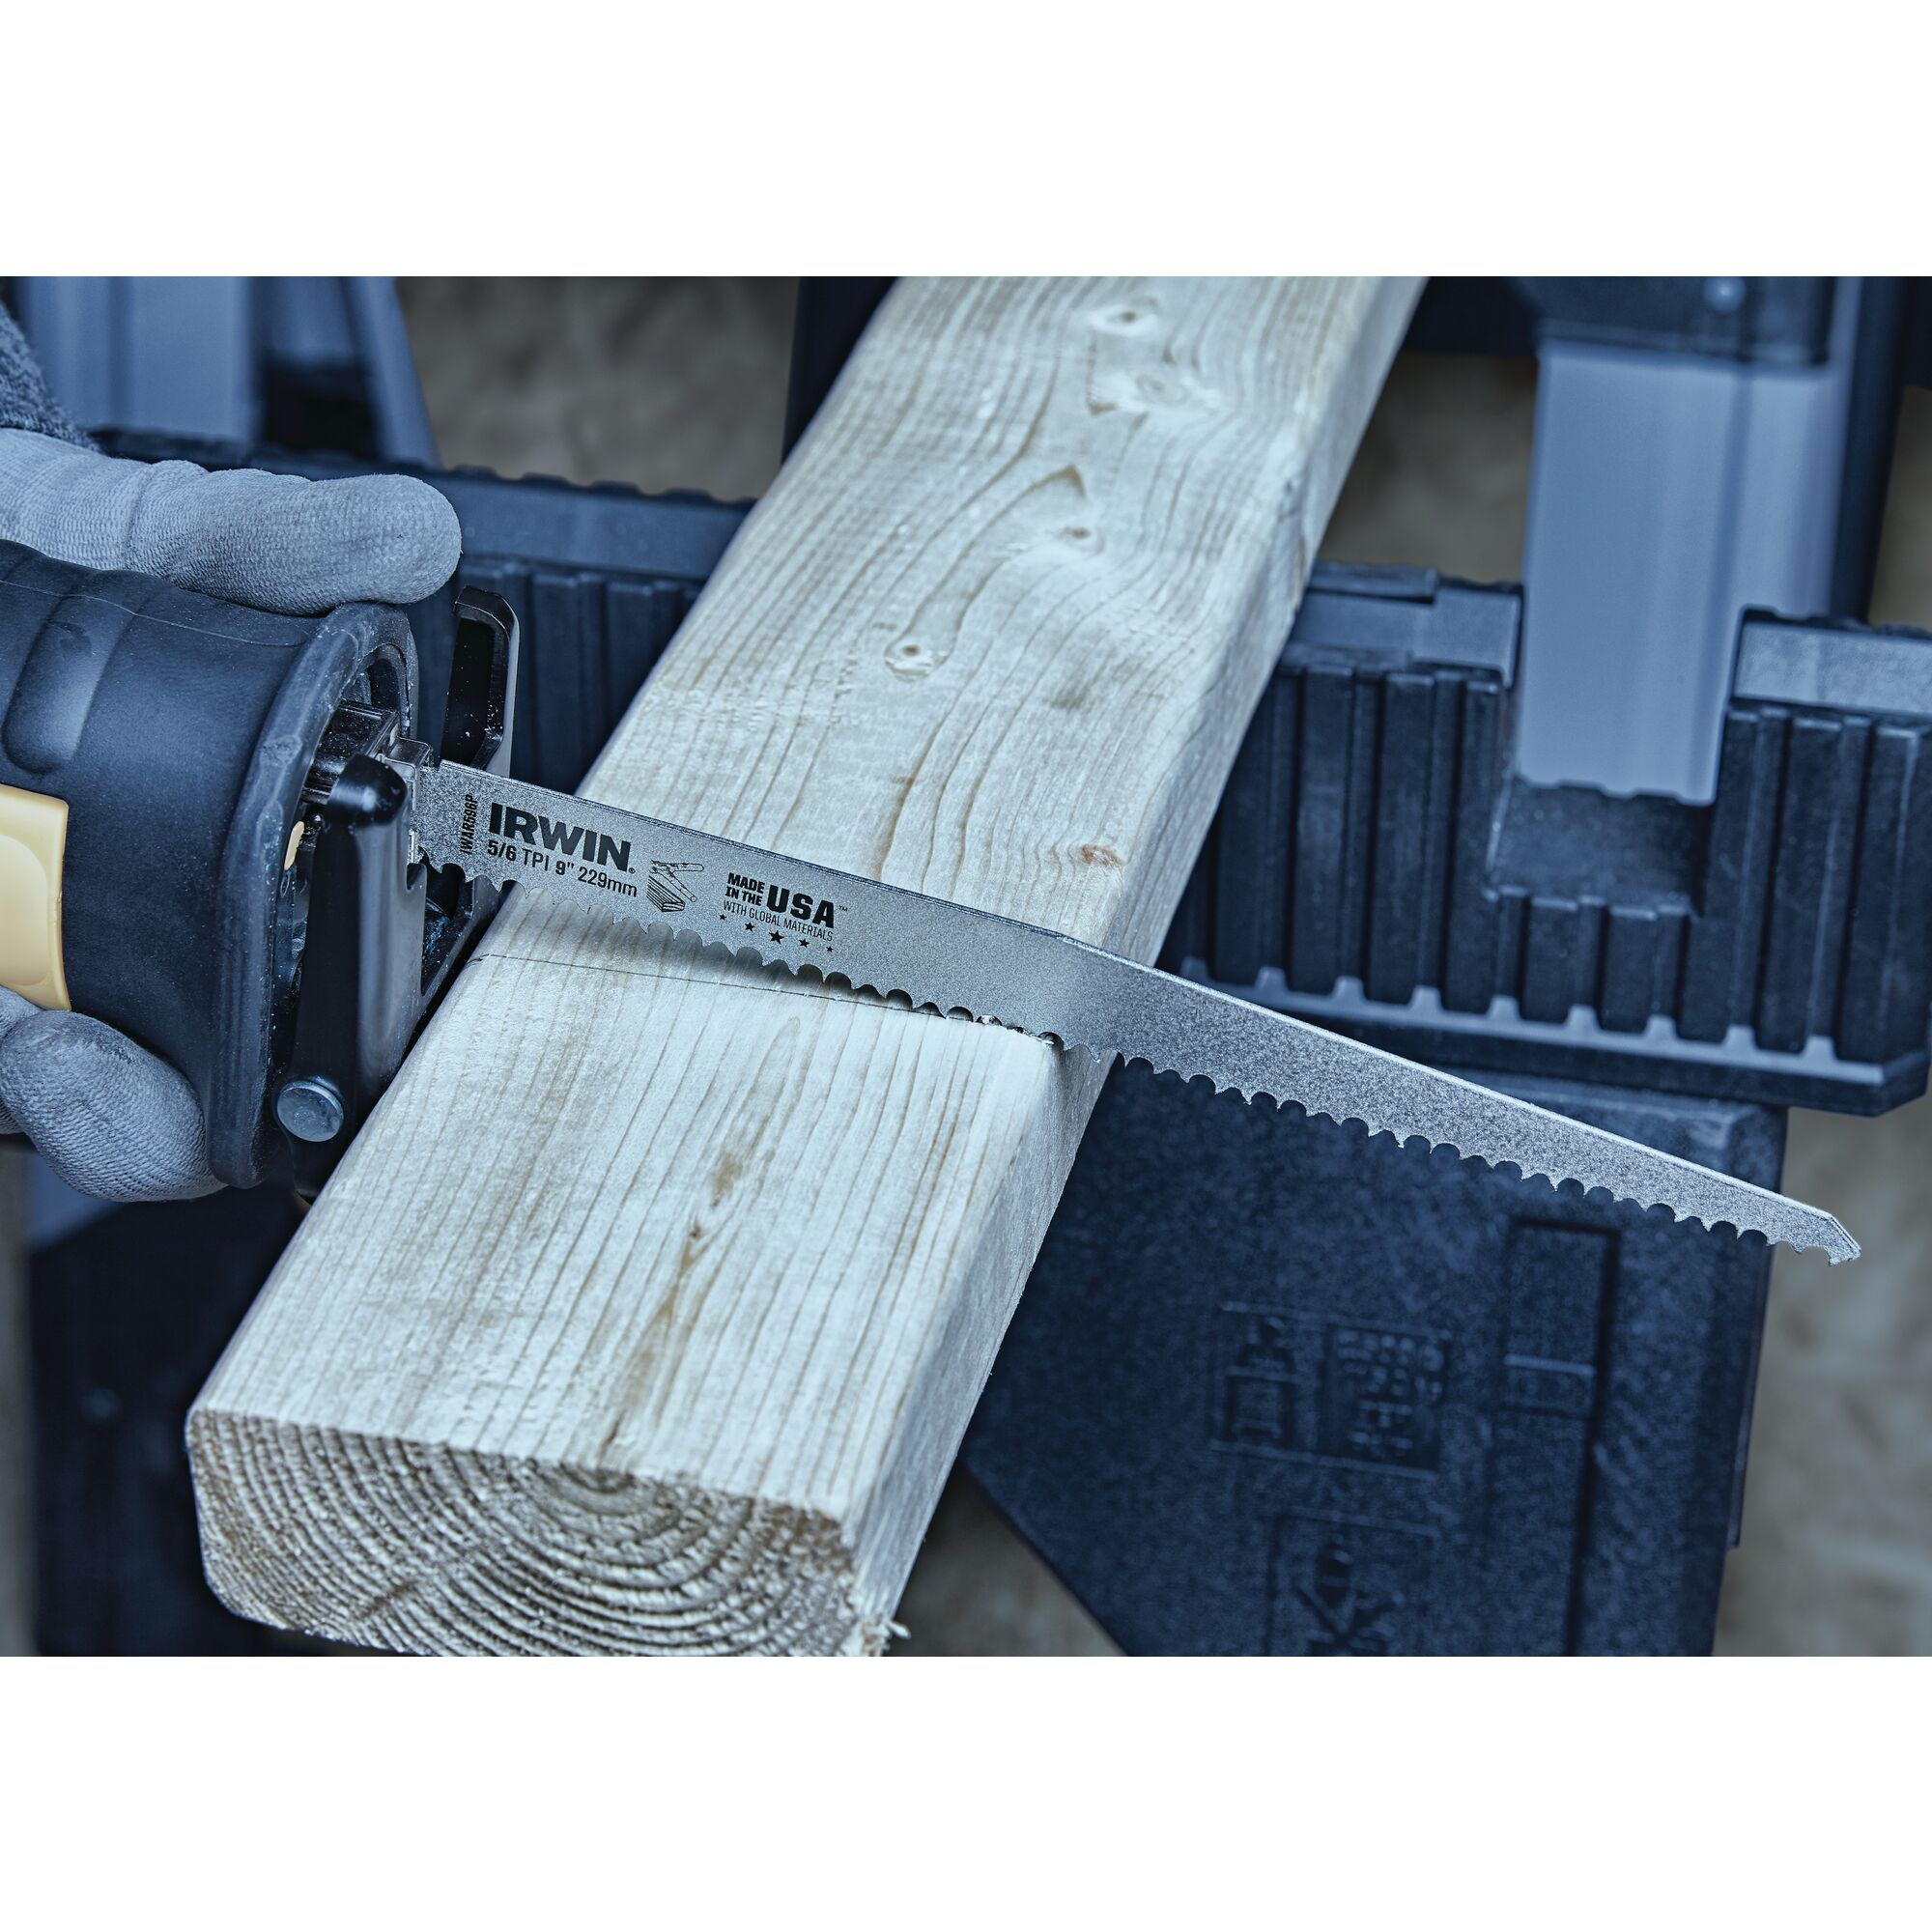 New Bi-Metal Reciprocating Saw Blades for Demolition Applications 